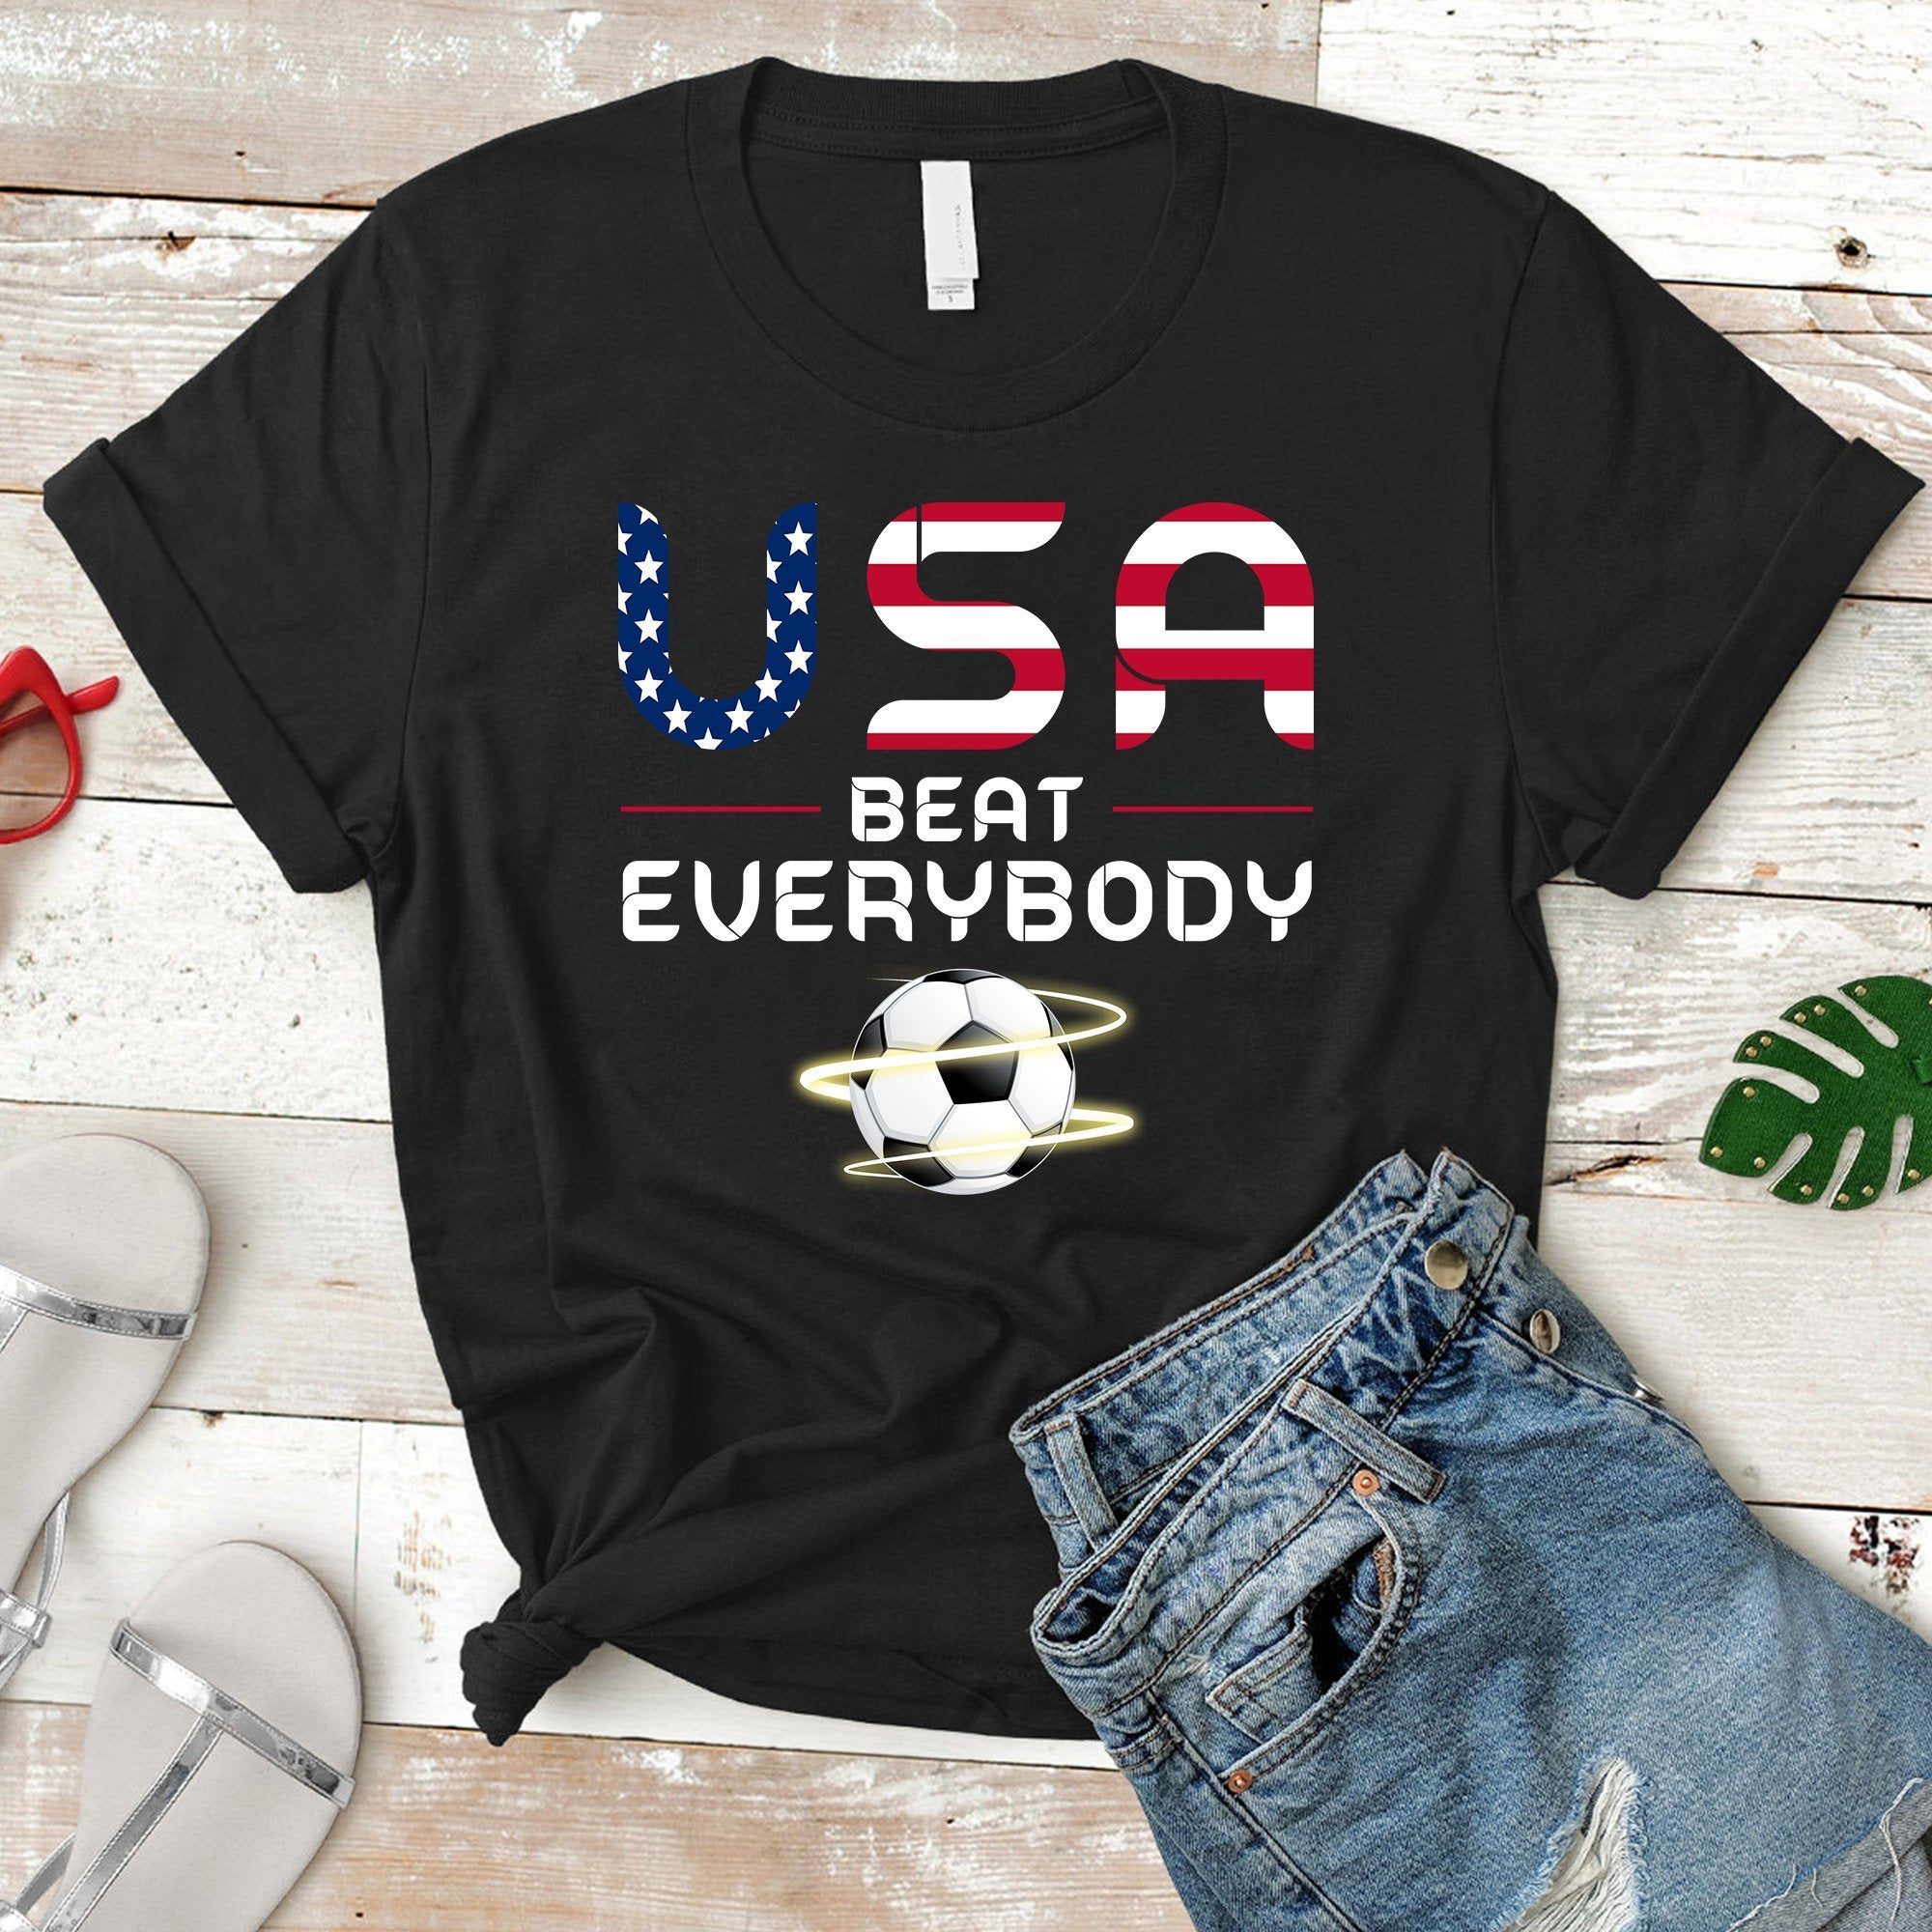 world cup champion shirts